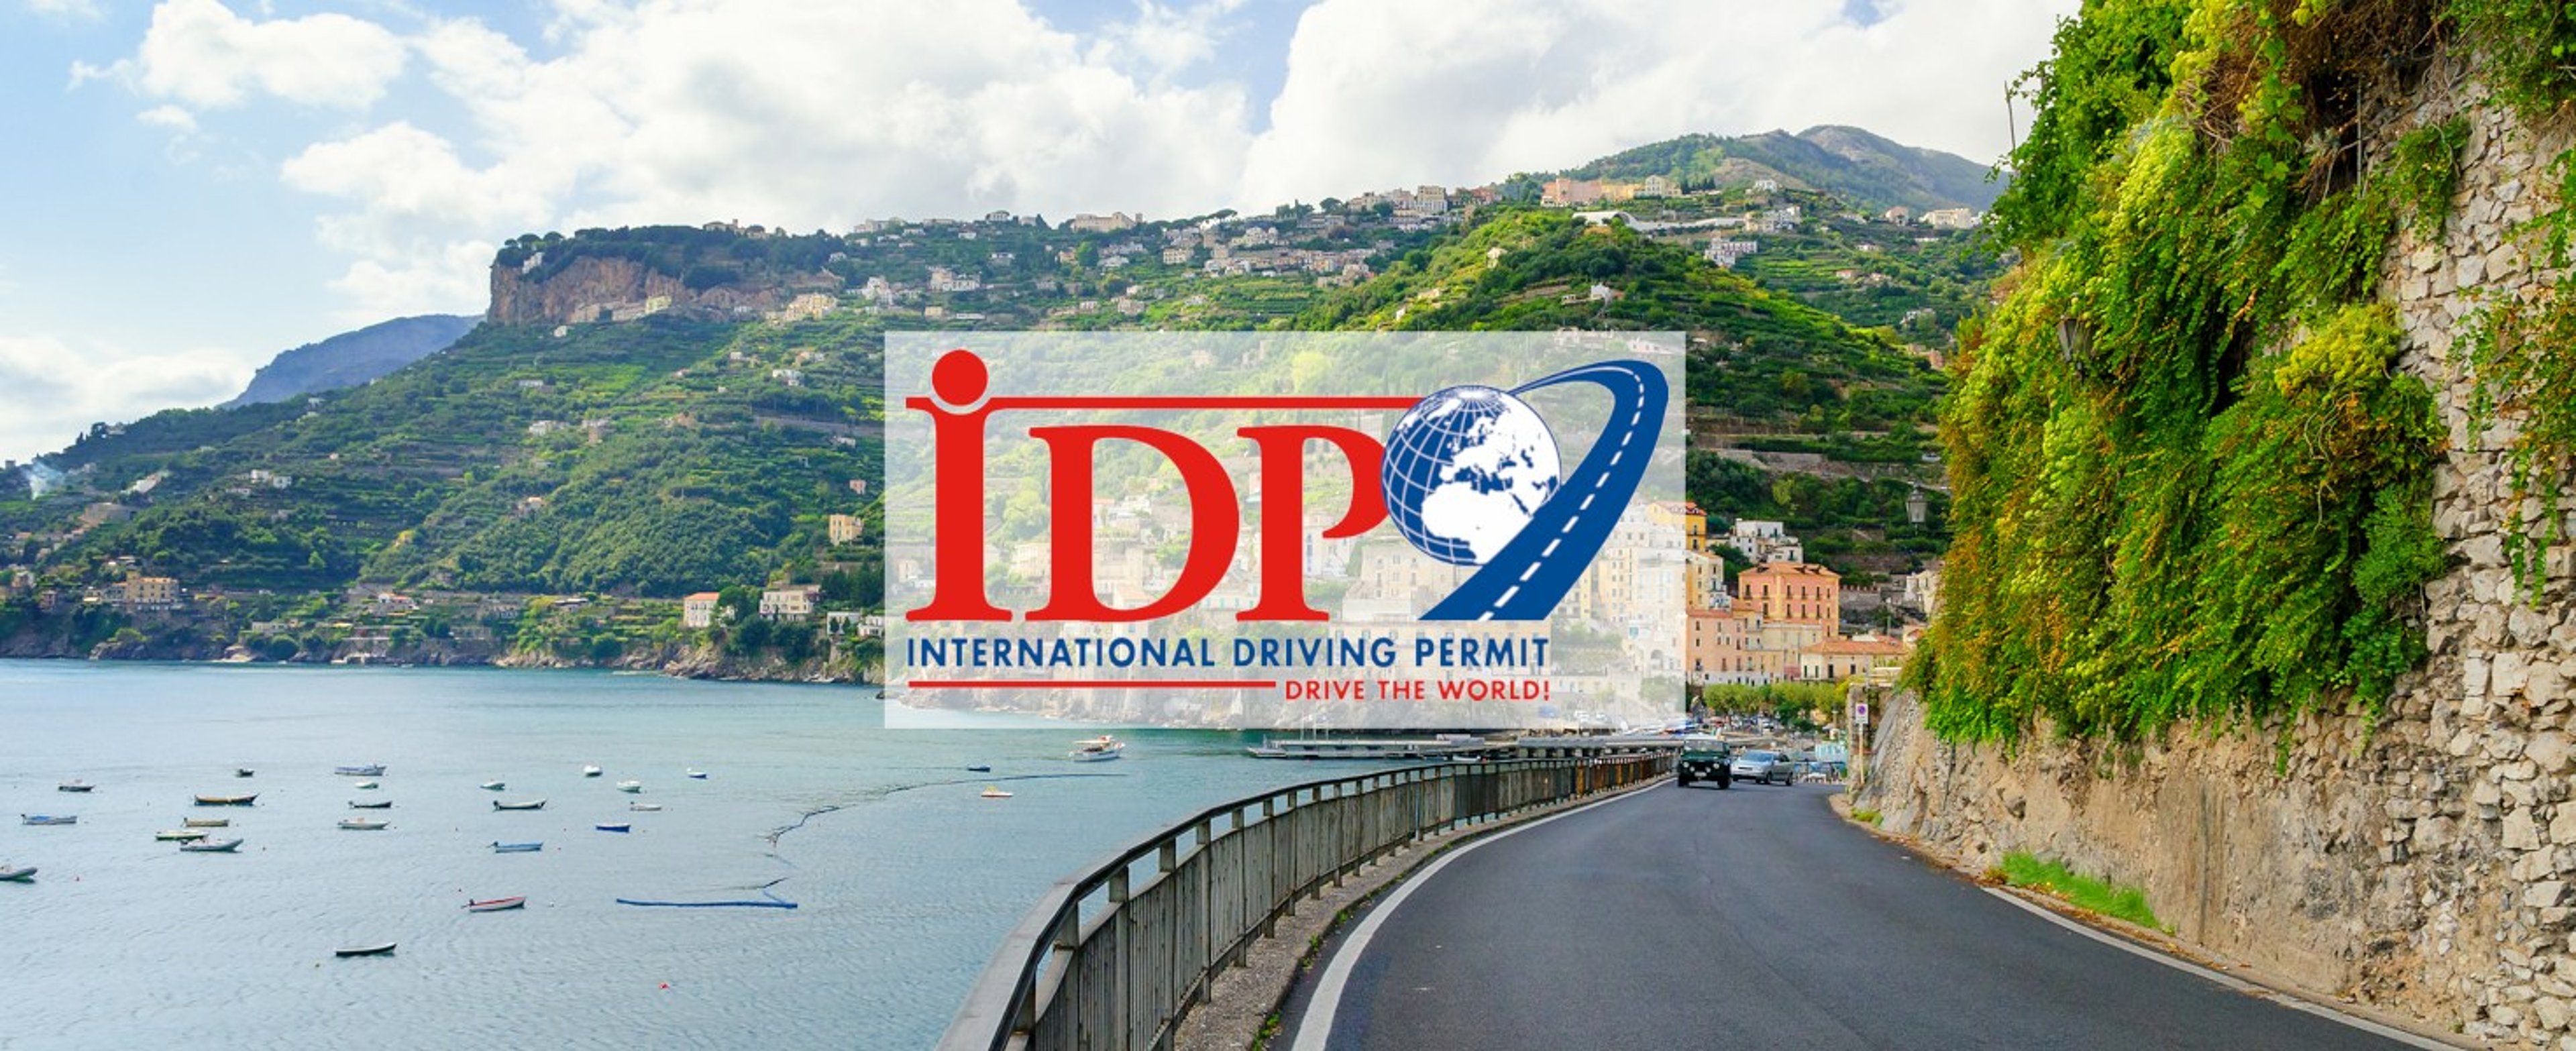 International Driving Permit